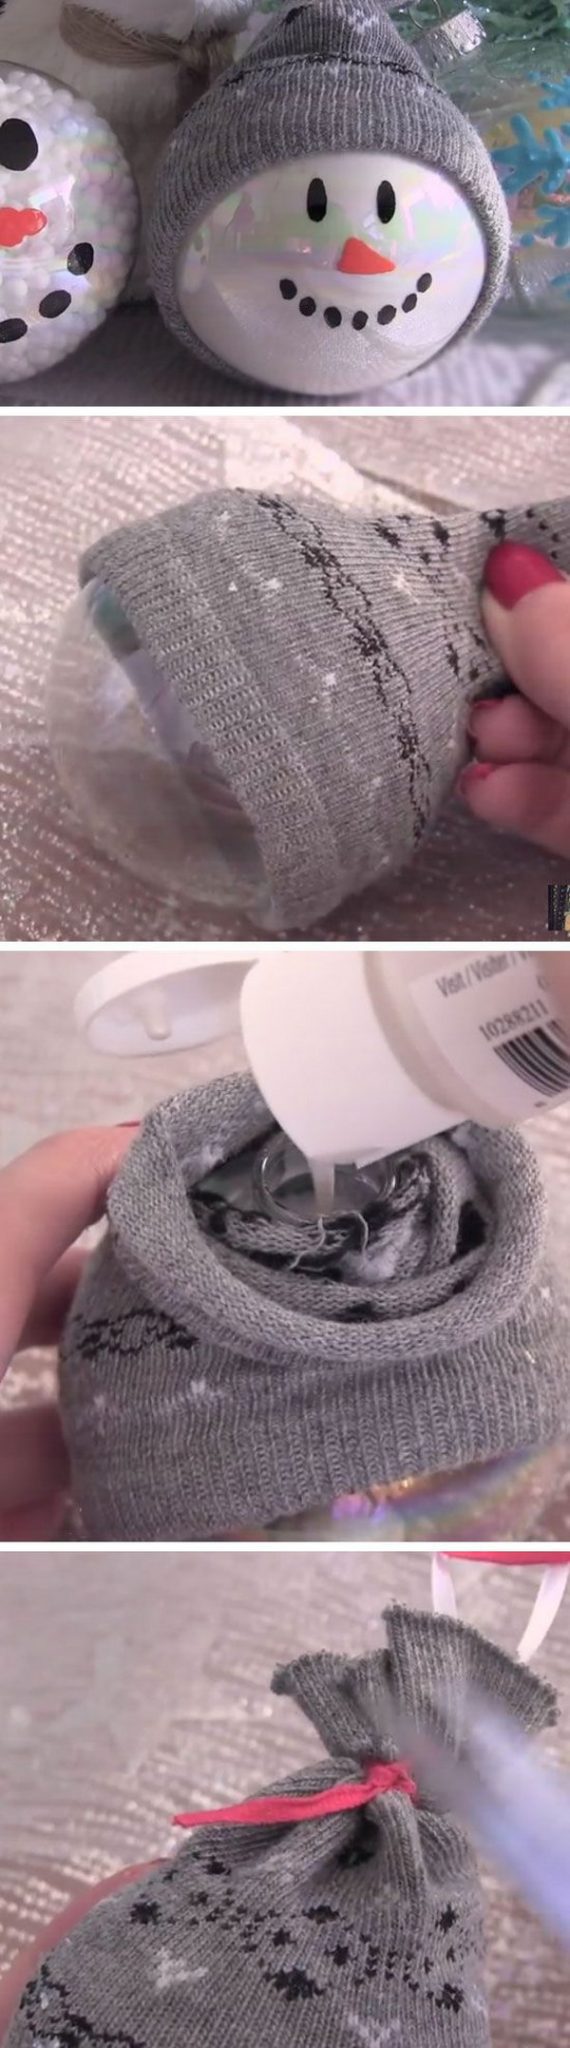 DIY Repurposed Sock Snowman Ornaments